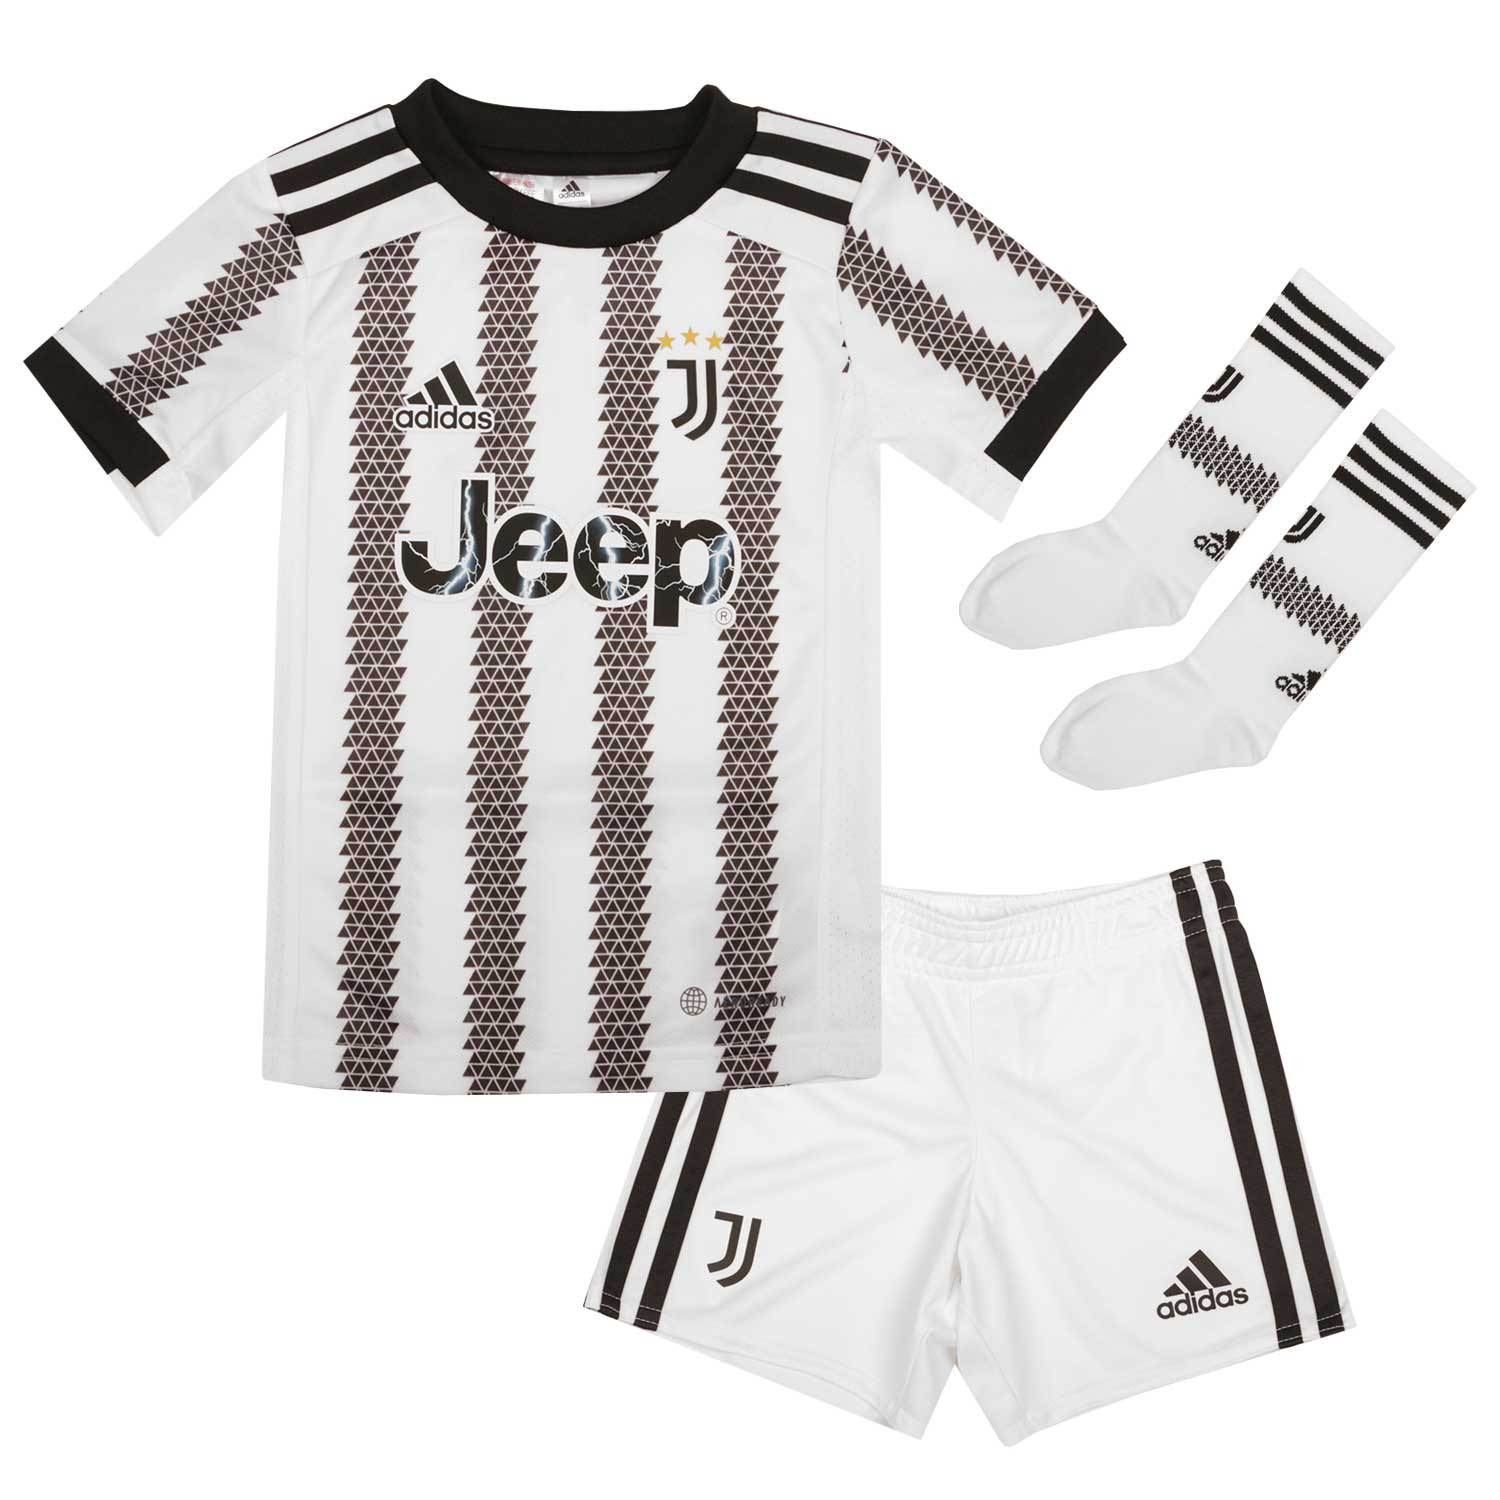 adidas Cristiano Ronaldo Juventus FC - Camiseta para hombre, color blanco